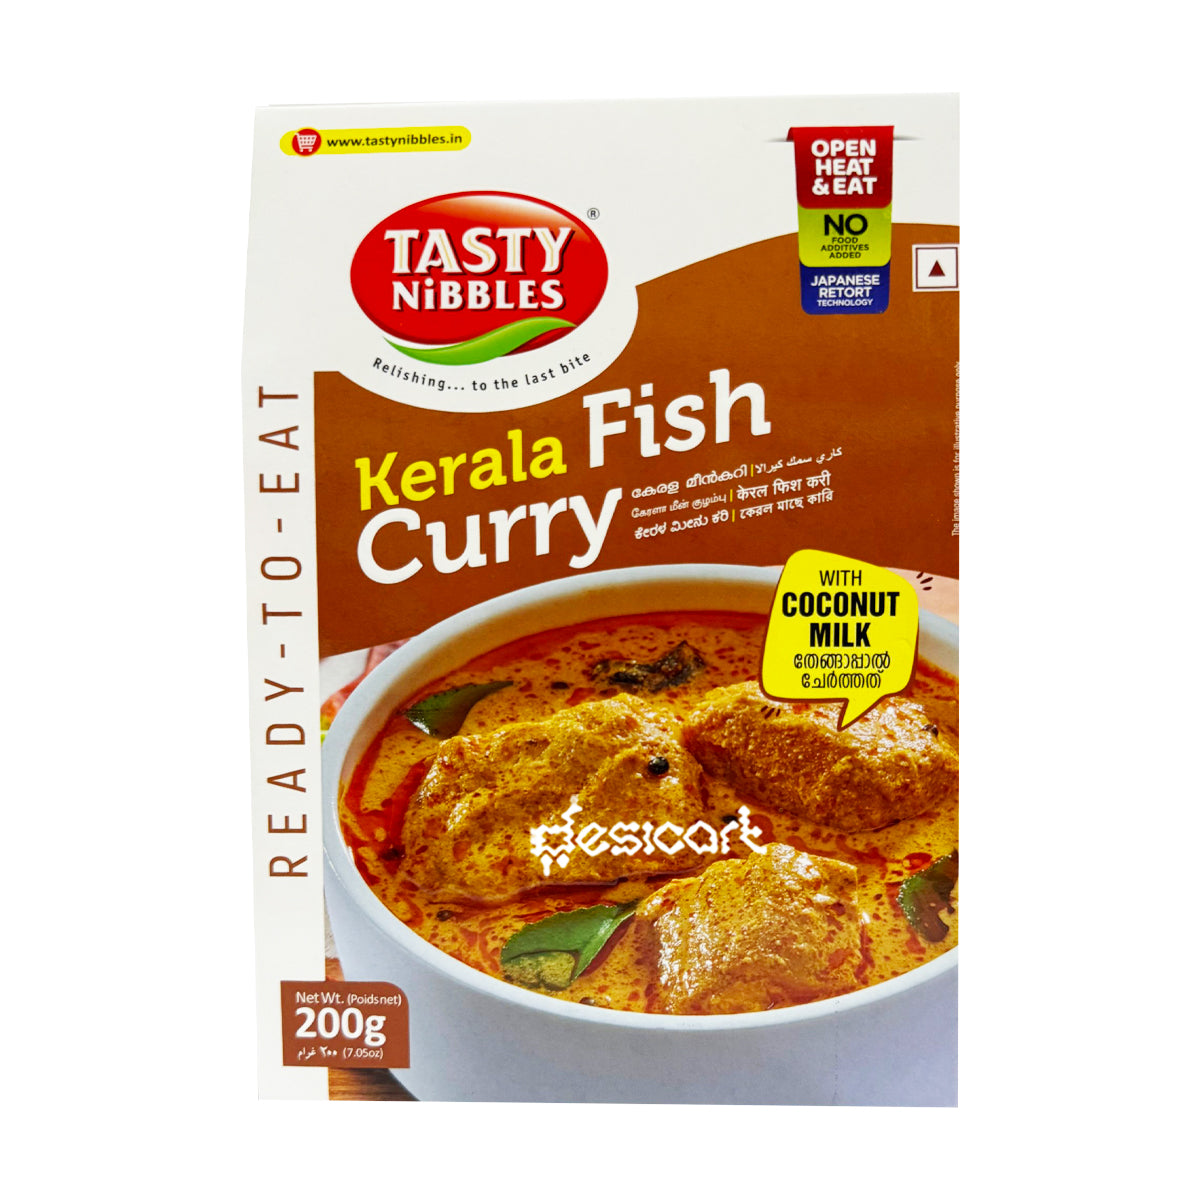 Tasty Nibbles Kerala fish Curry Coconut Milk 200g